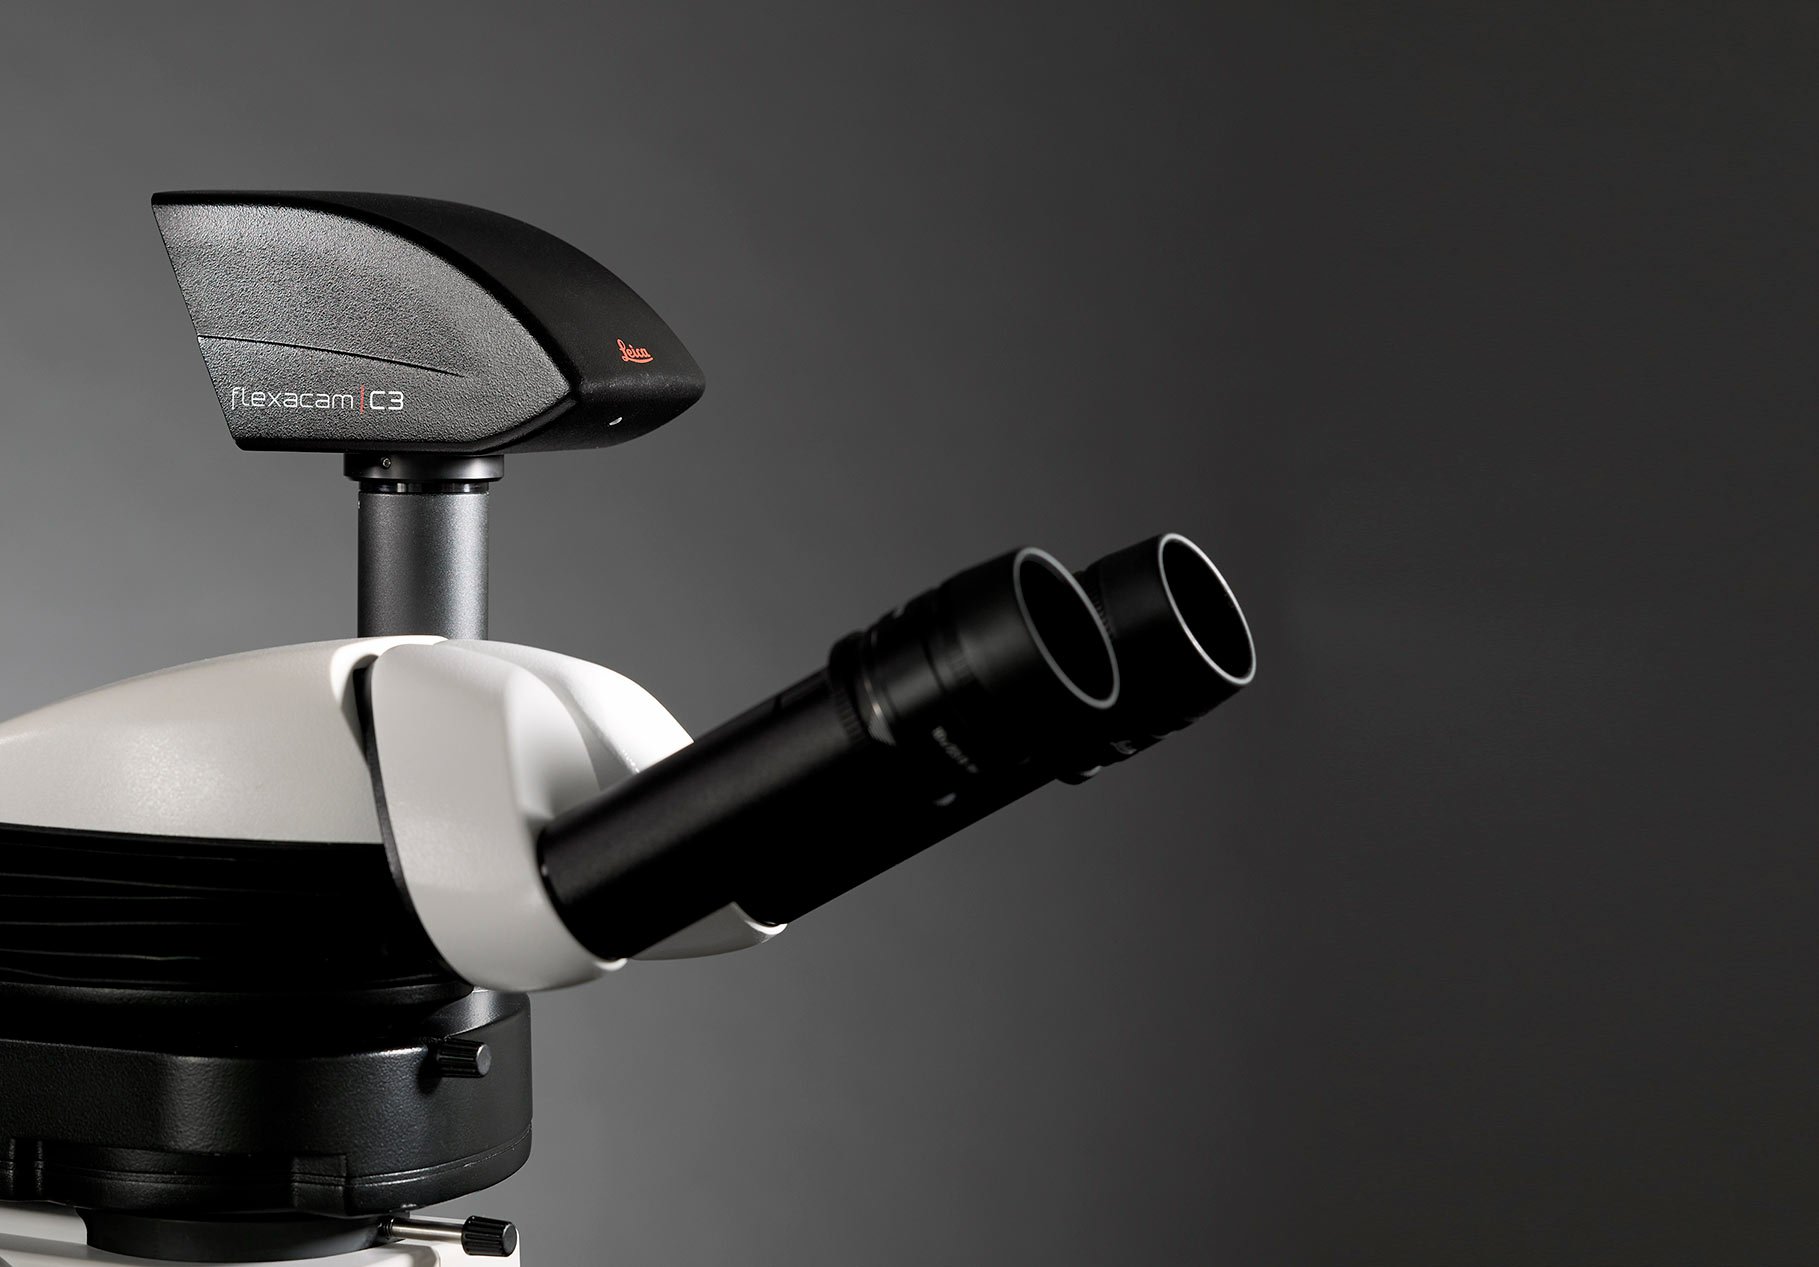 Leica Flexacam C3 Microscope camera - supplied by IDM Instruments Australia